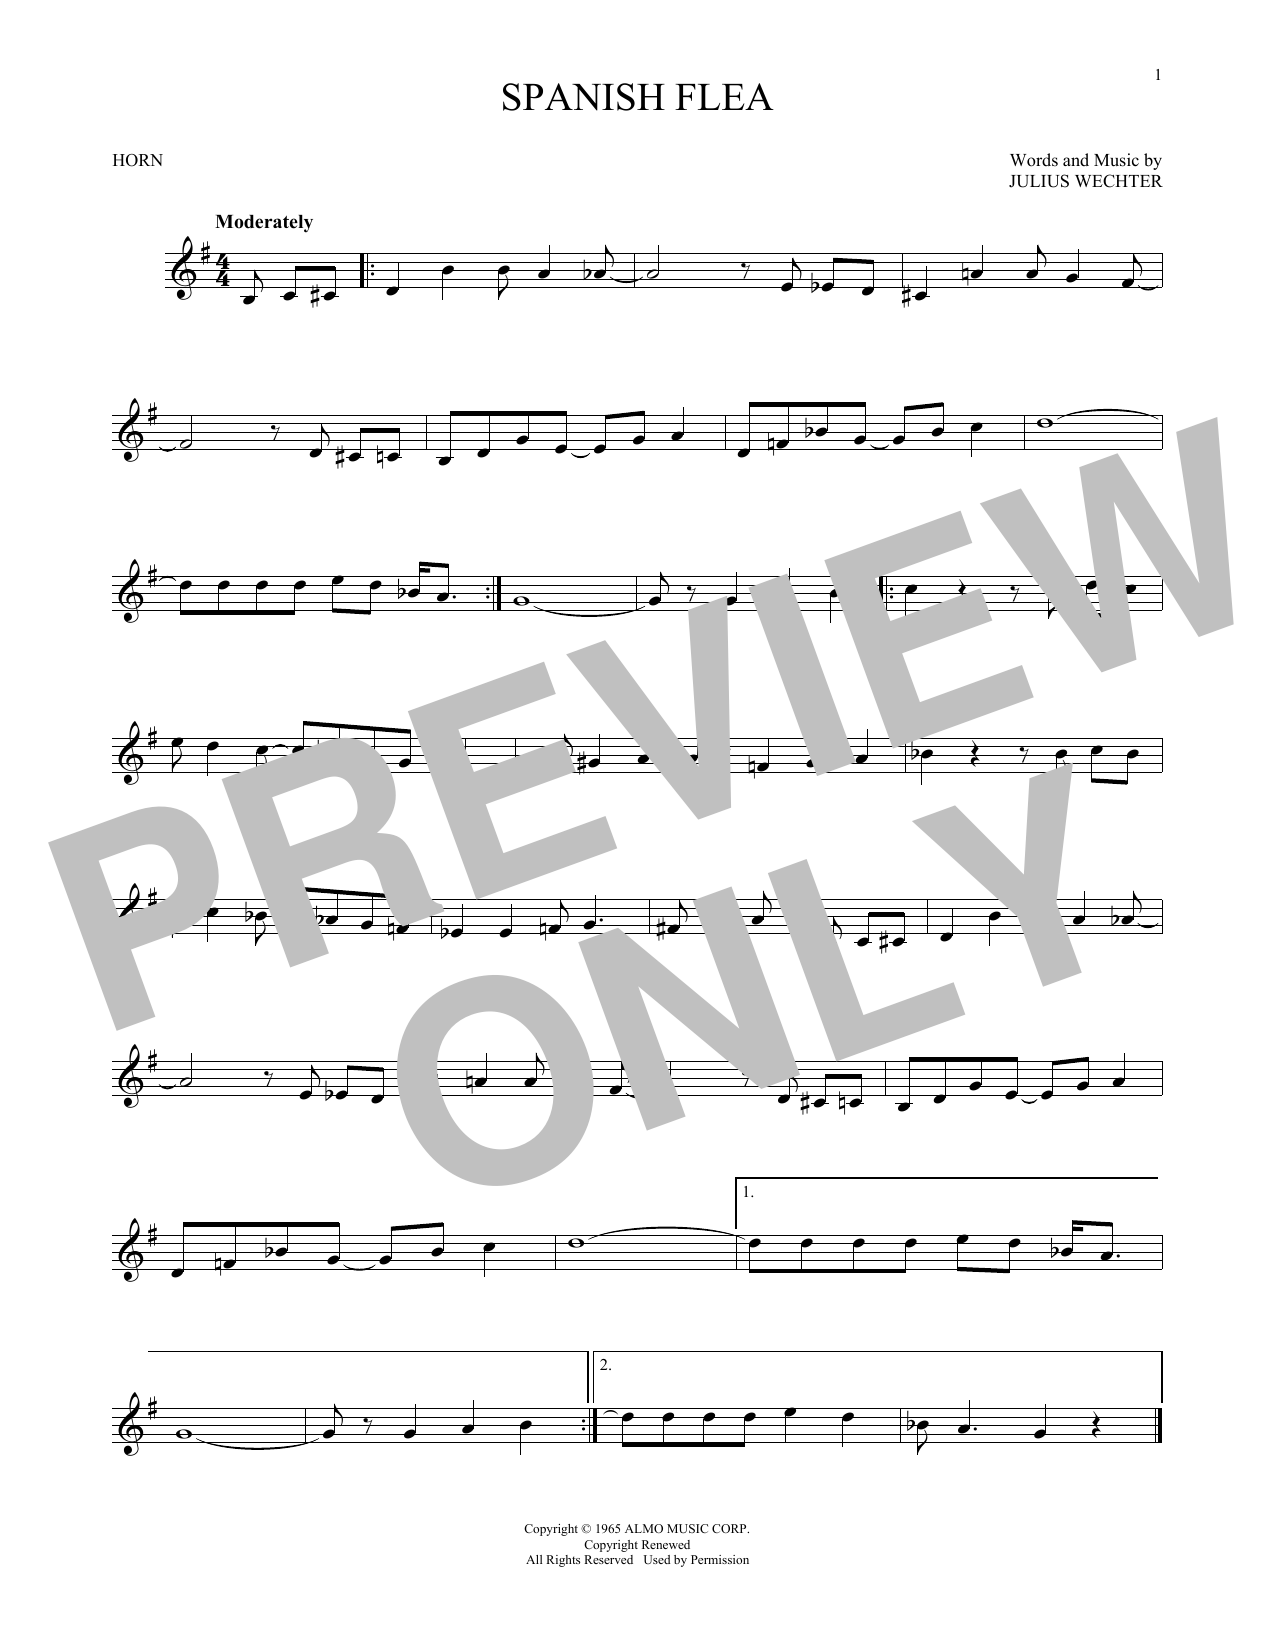 Herb Alpert & The Tijuana Brass Band Spanish Flea Sheet Music Notes & Chords for Violin - Download or Print PDF